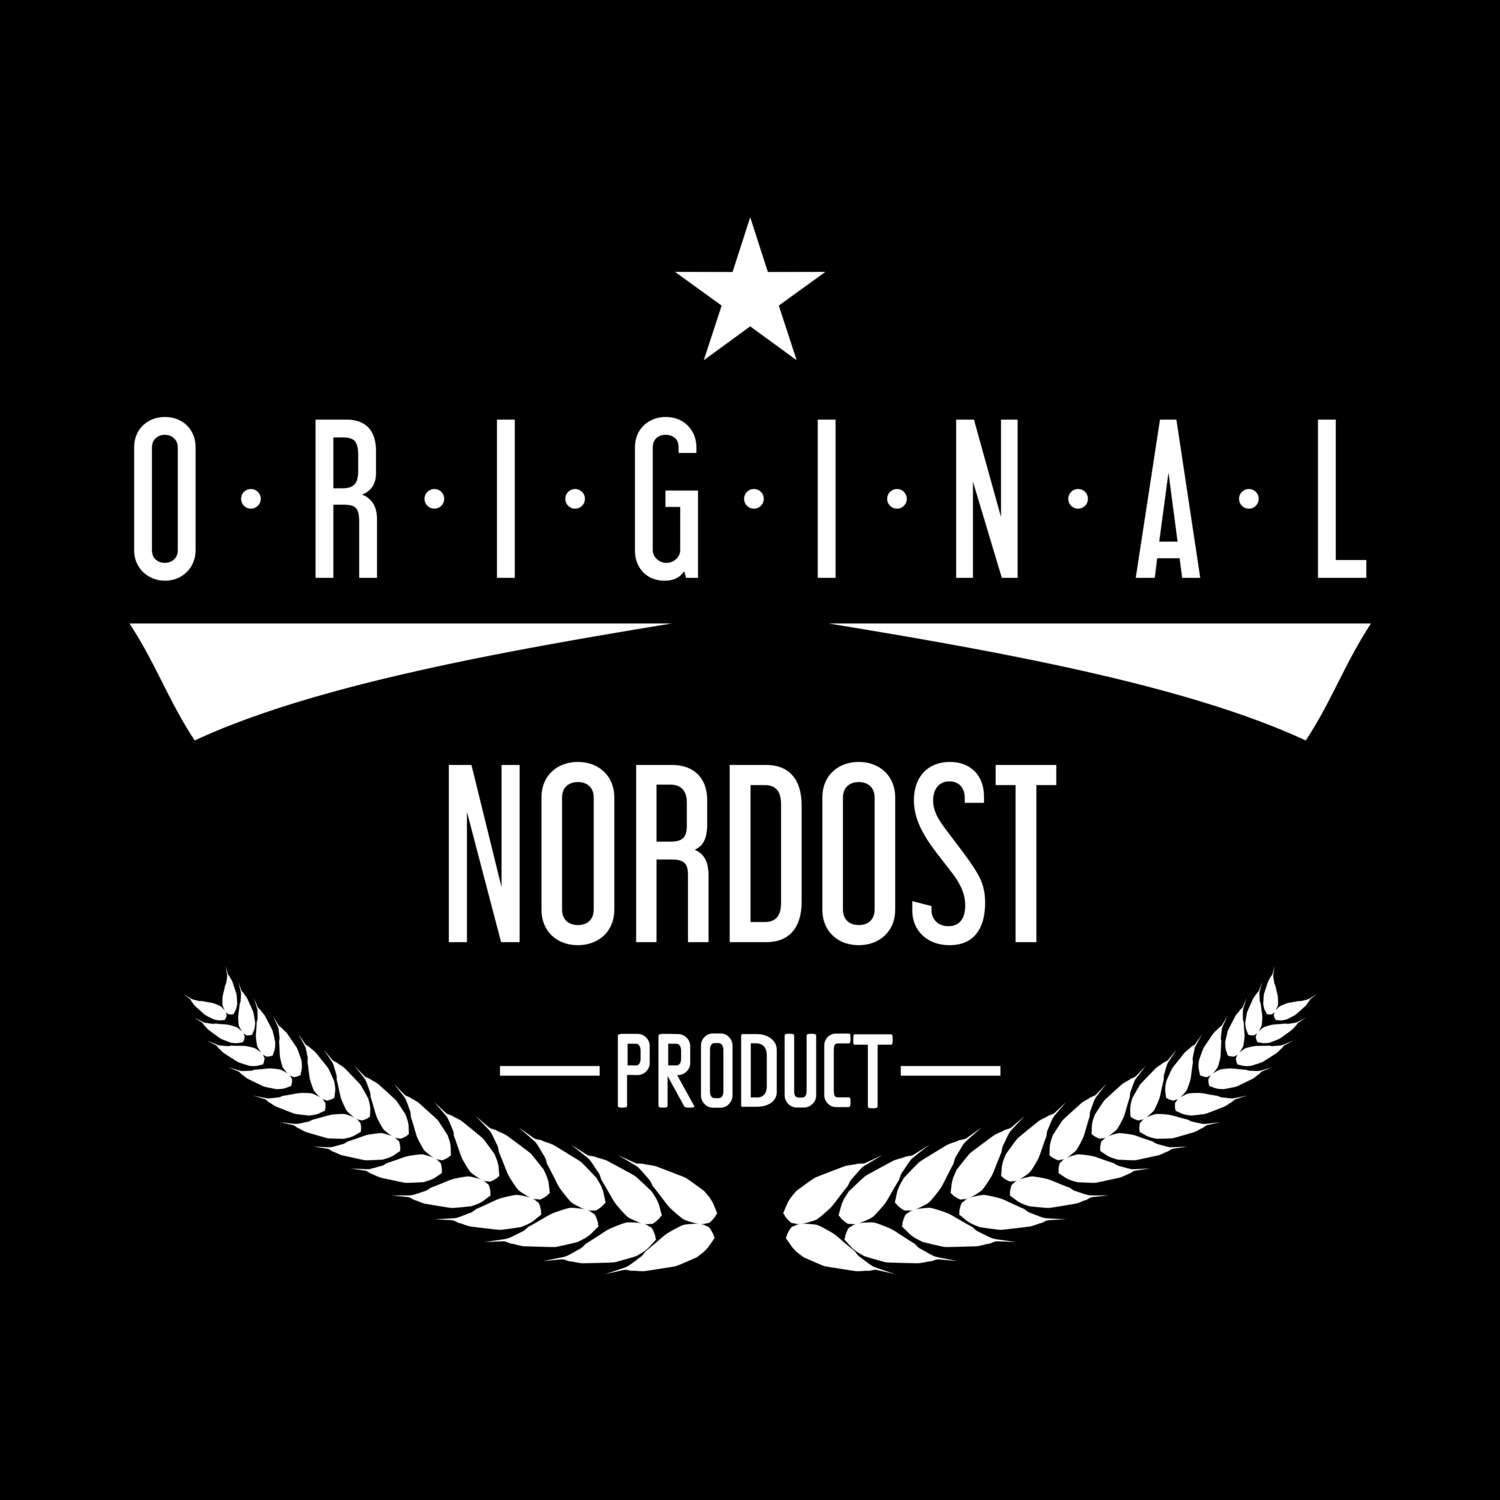 Nordost T-Shirt »Original Product«